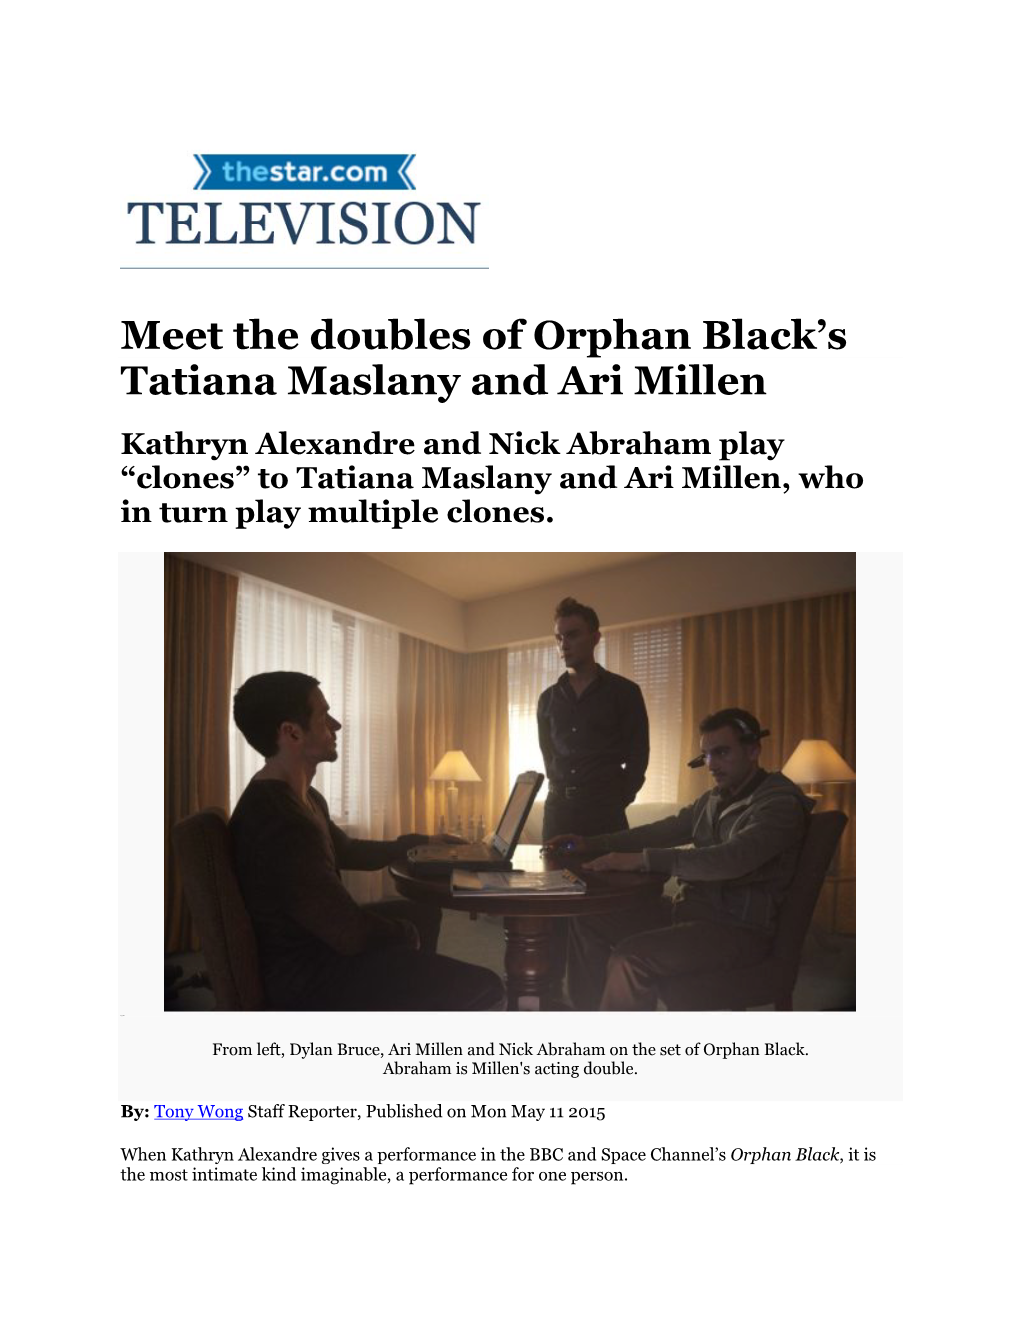 Meet the Doubles of Orphan Black's Tatiana Maslany and Ari Millen